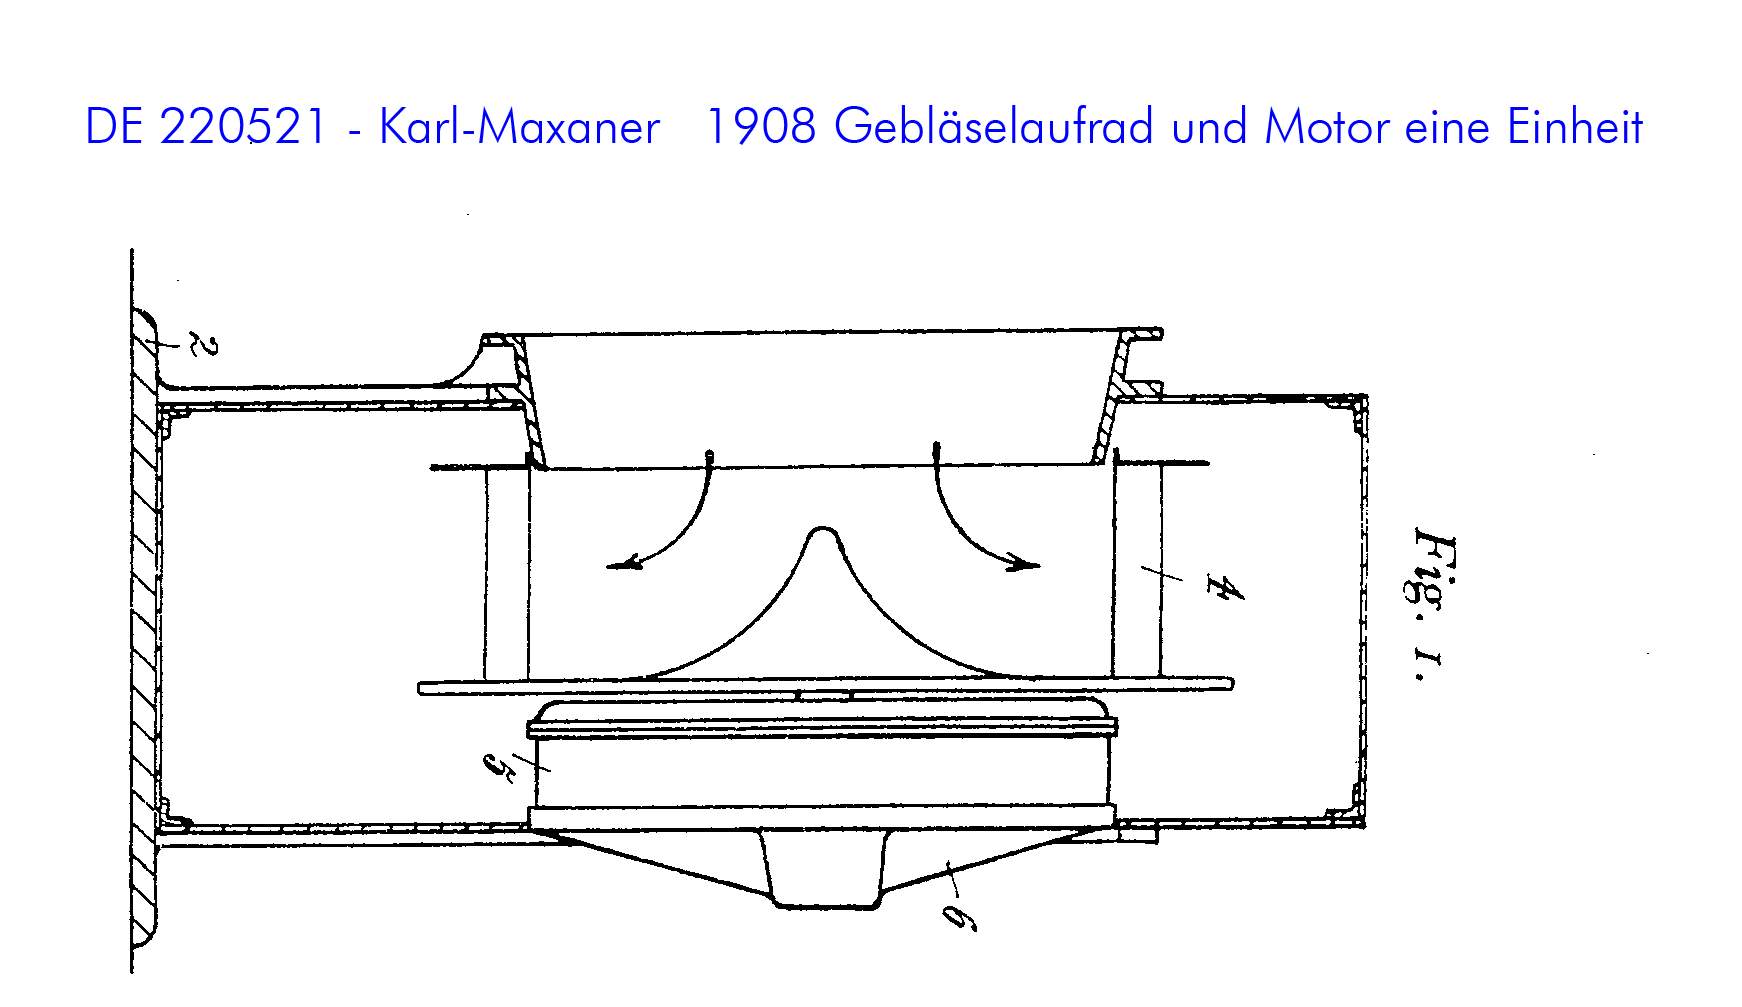 Carl Maxaner - Gebläse mit integriertem Motor im Einströmkörper